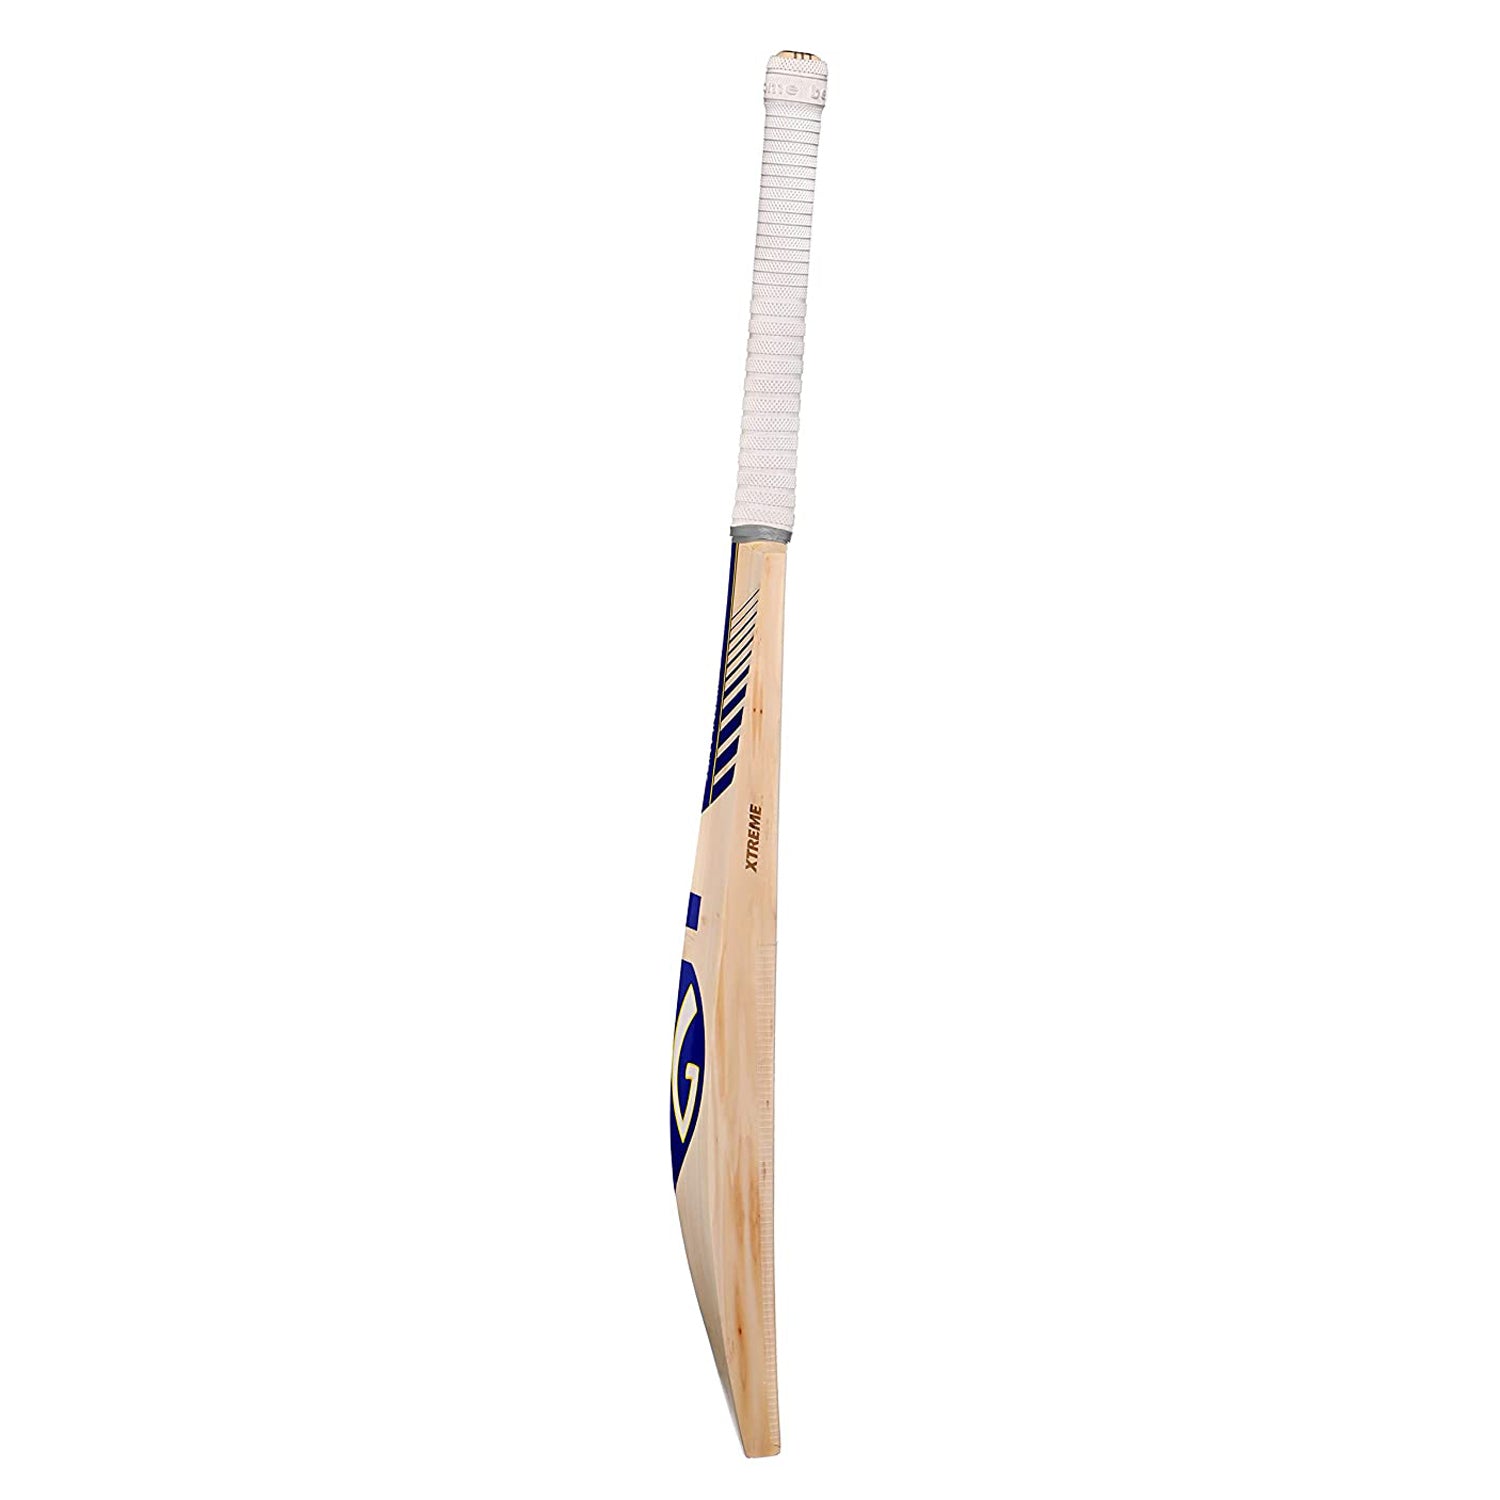 SG IK Xtreme English Willow Cricket Bat - Best Price online Prokicksports.com